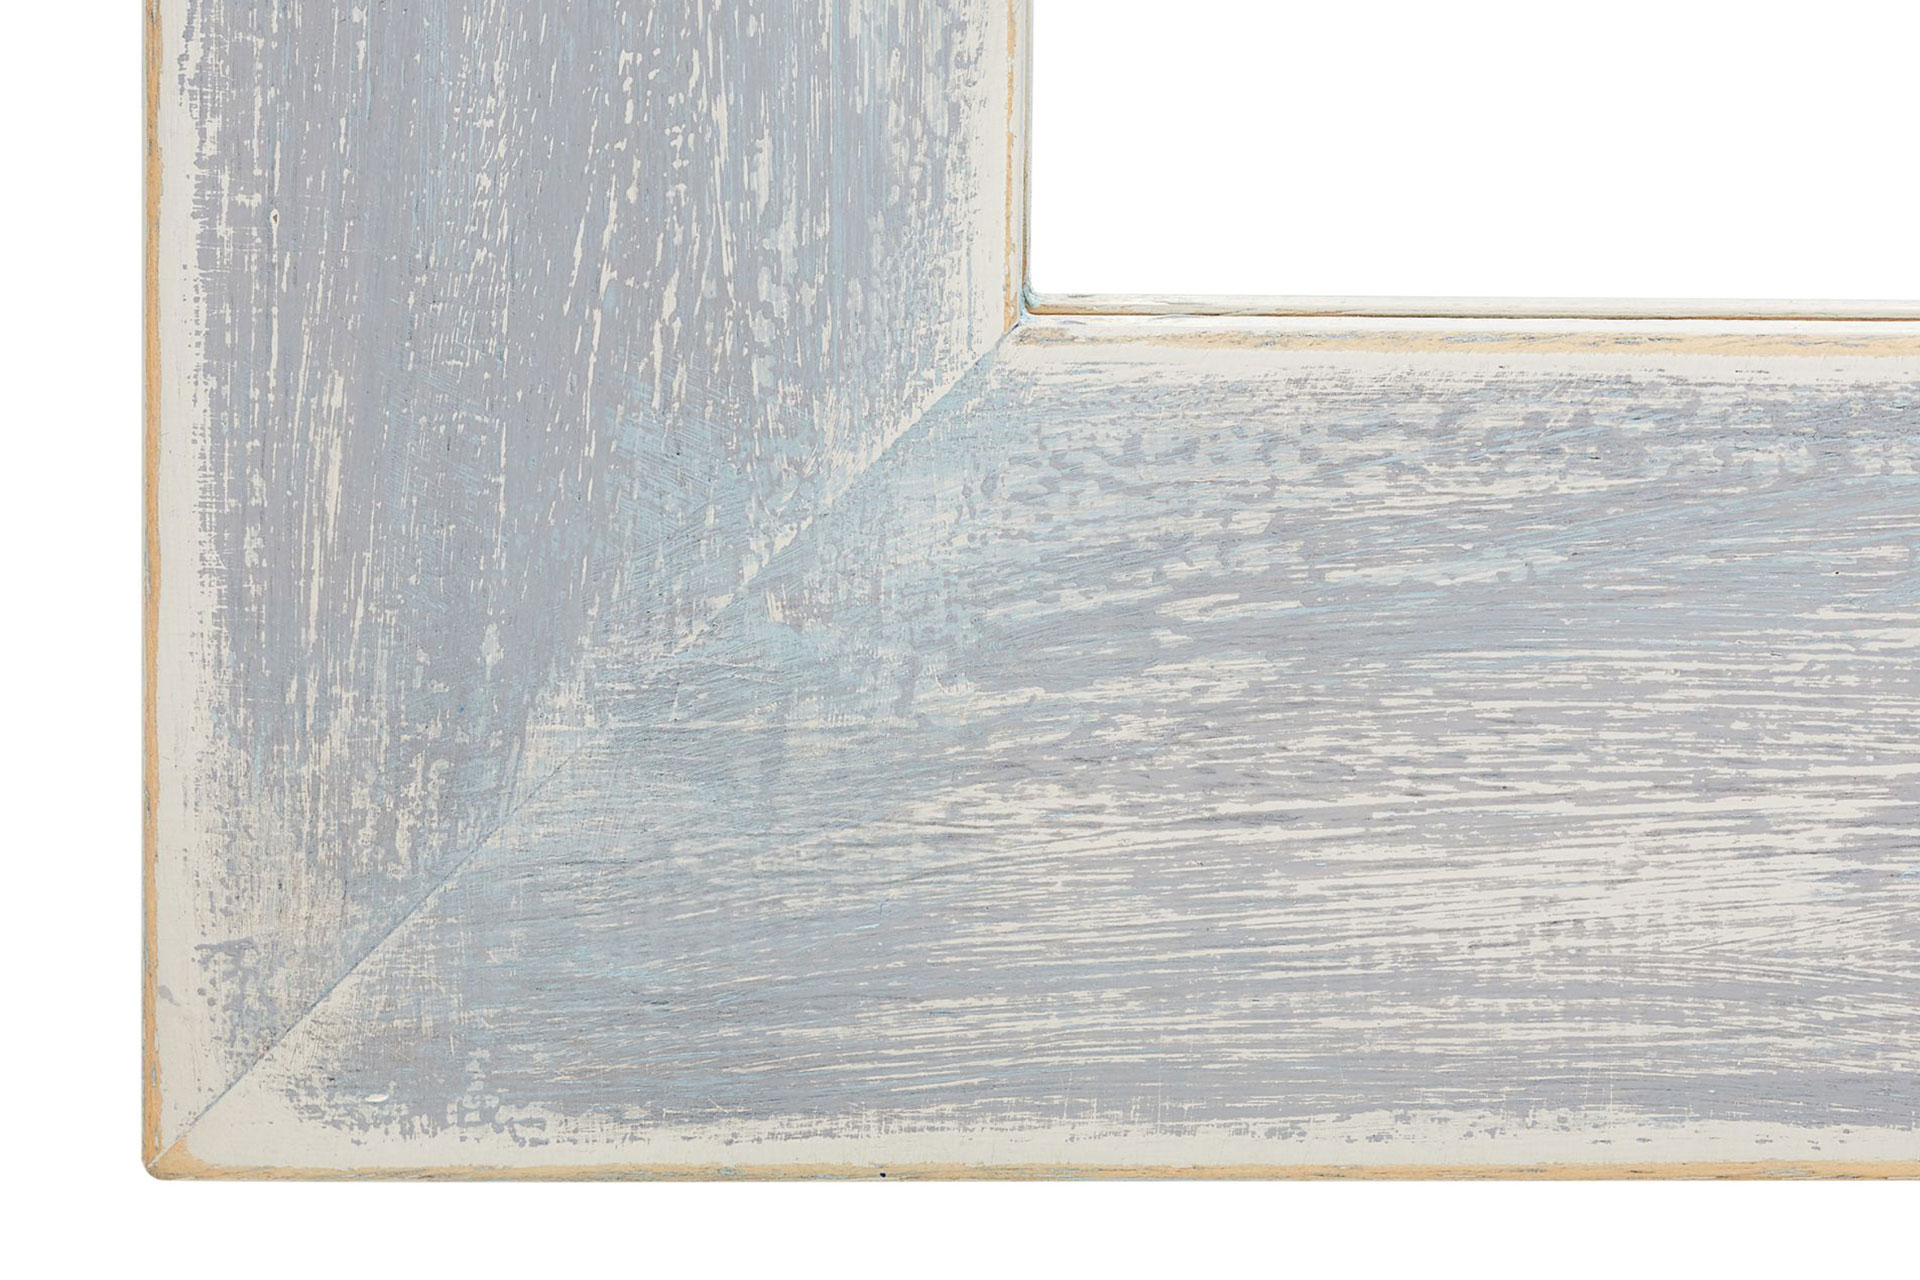  Fotorahmen Modell Basel im Shabby-Chic Stil, Finishing: Wachstechnik, Design/Farbe: Warm & Dusty blue, Made in Germany, Material: Holz, Style: modern, Ansicht Rahmenecke